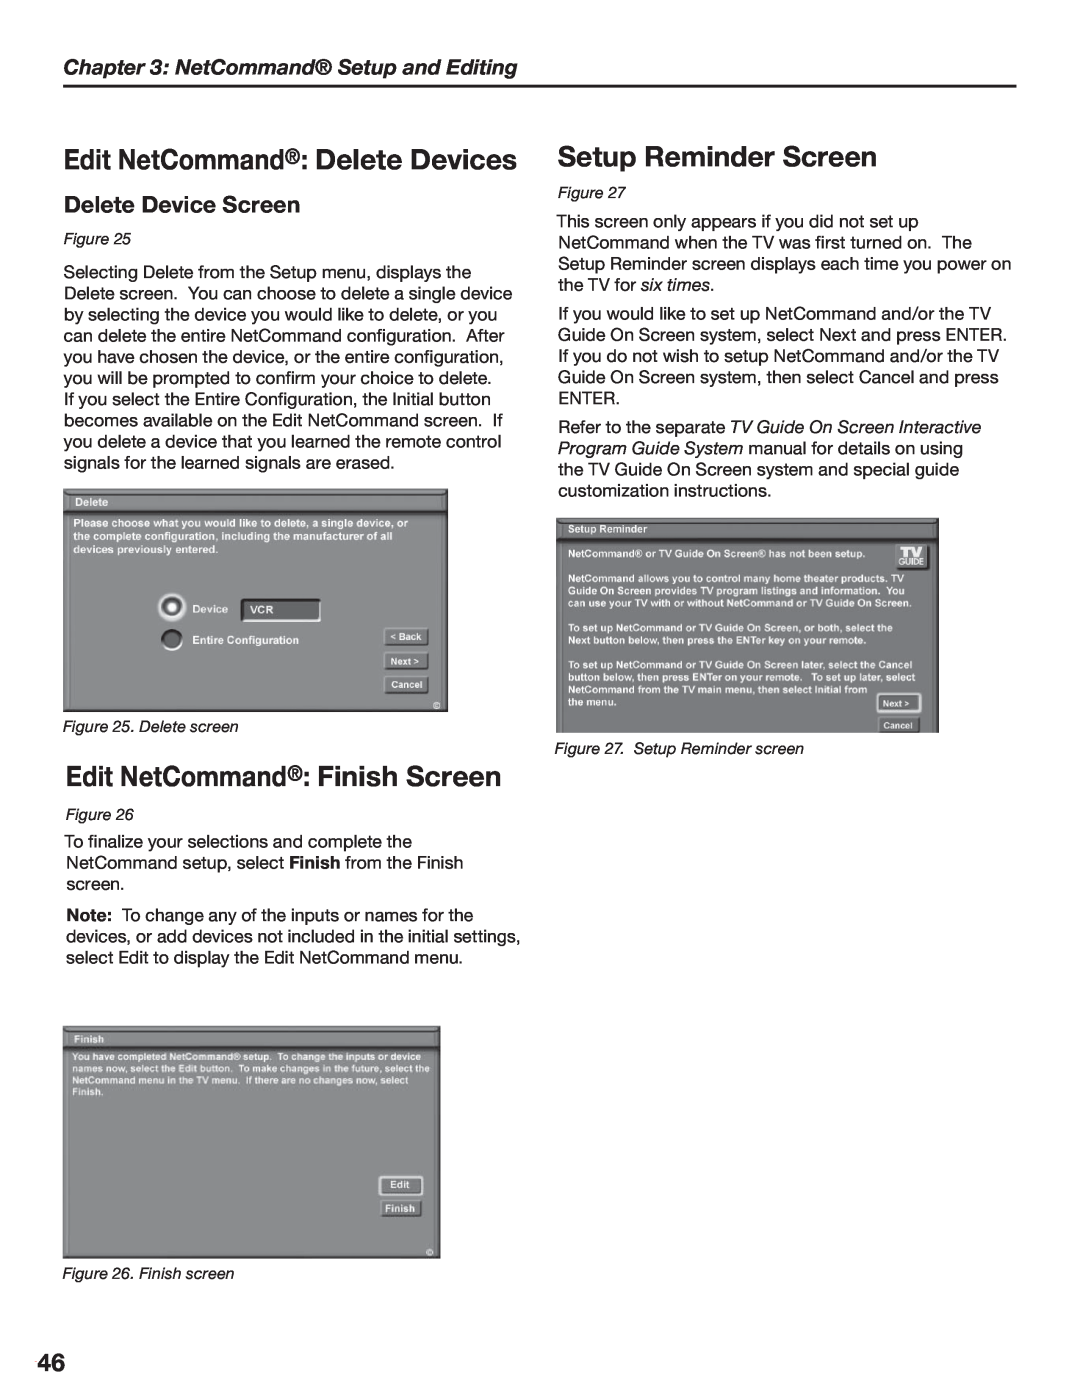 Mitsubishi Electronics LT-3280 manual Edit NetCommand Delete Devices, Setup Reminder Screen, Edit NetCommand Finish Screen 